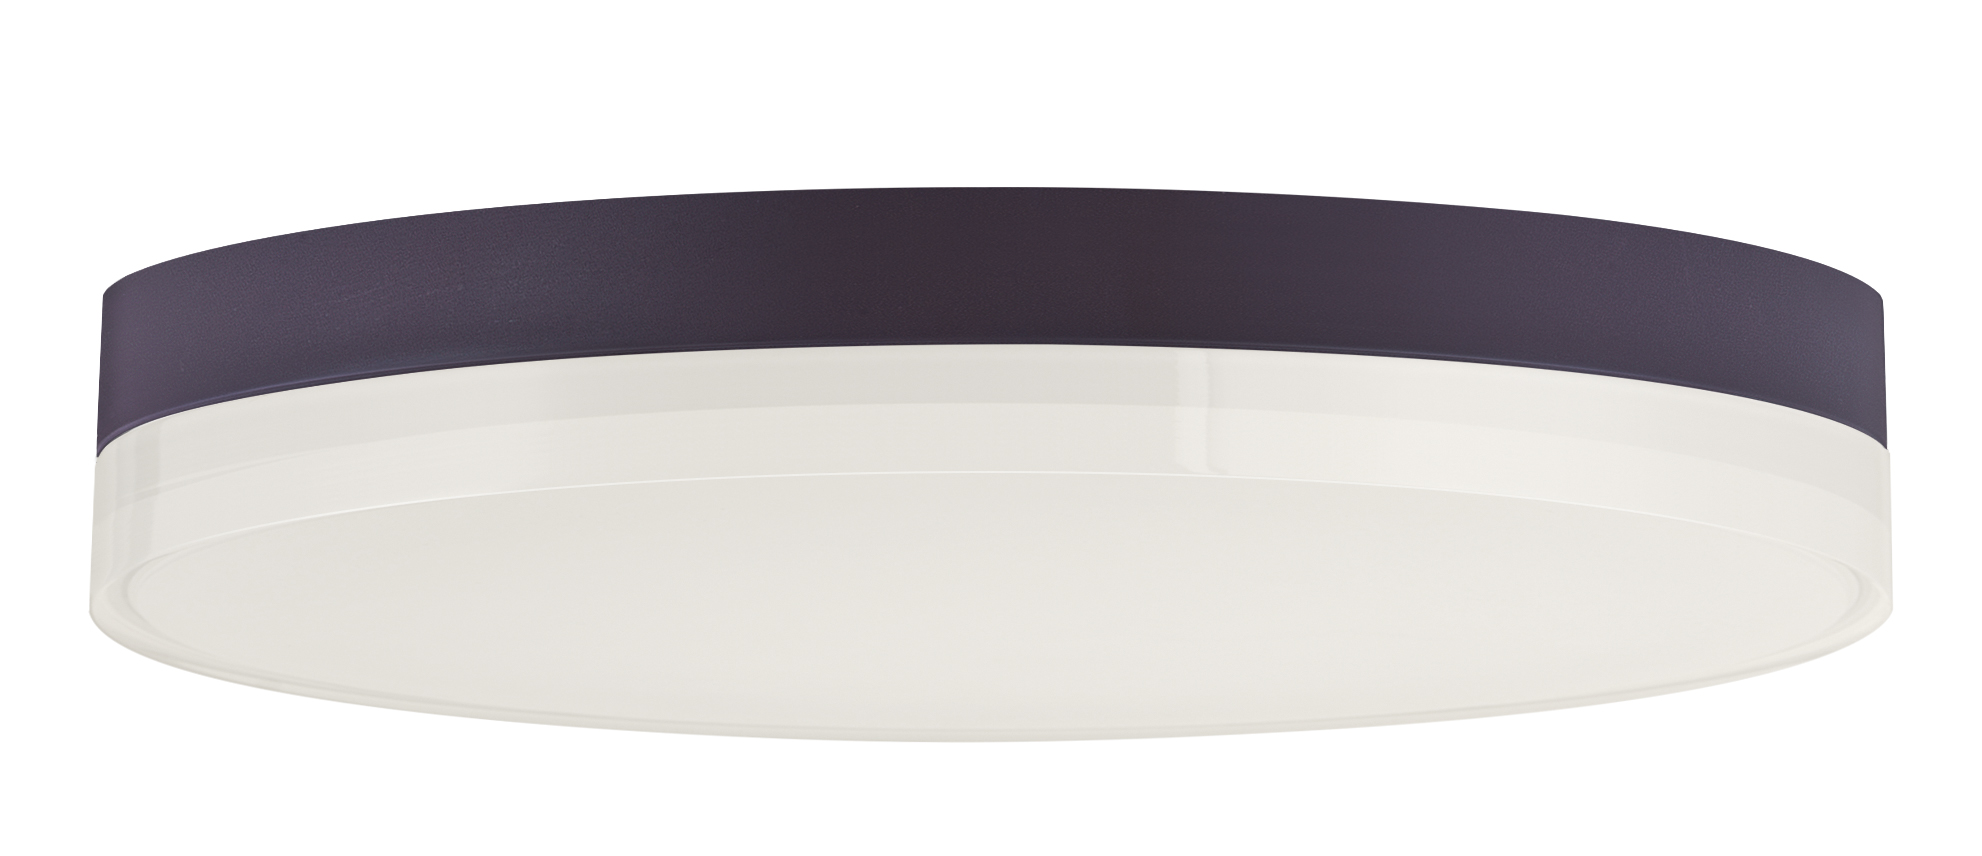 Illuminaire II 11-inch Round LED Flush Mount 3000K | Maxim Lighting